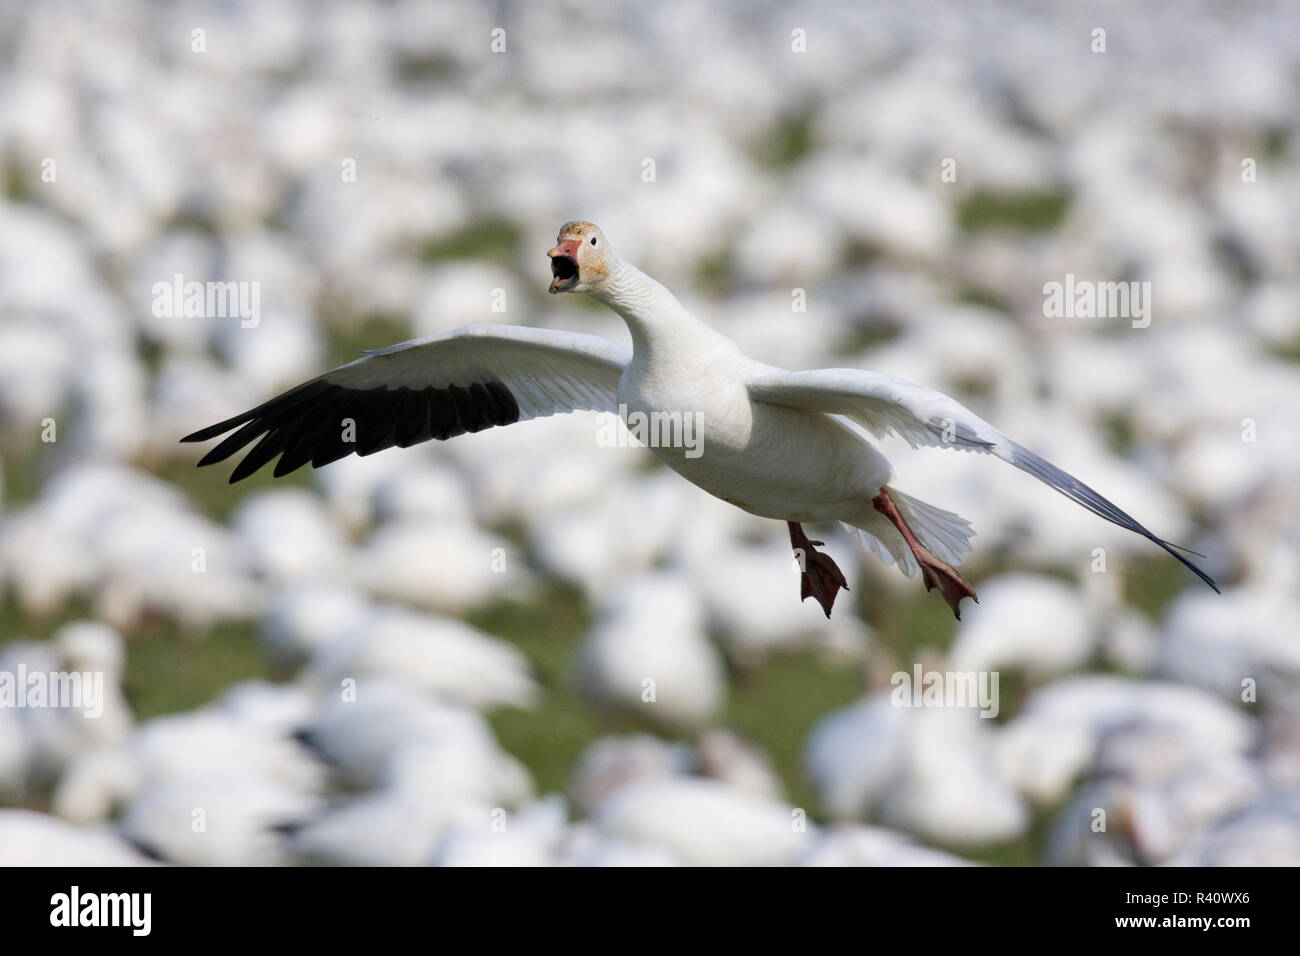 Snow goose alighting among large flock Stock Photo